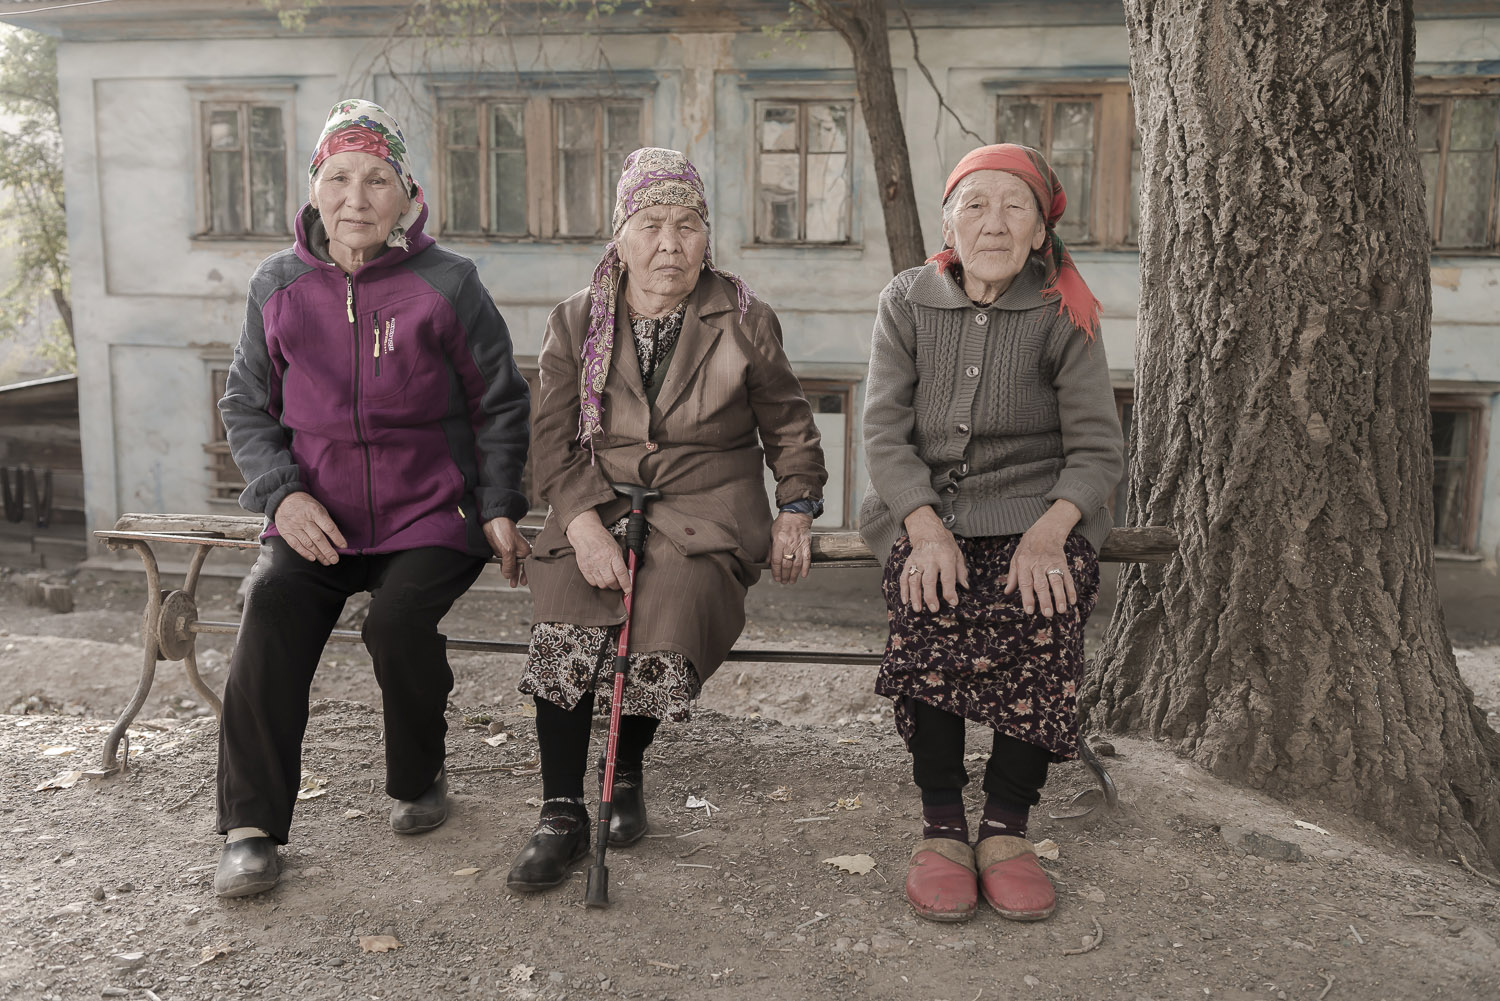 jo-Kearney-videojournalist-photographer-cheltenham-minkush-min-kush-old-women-kyrgz-Soviet-Union.jpg